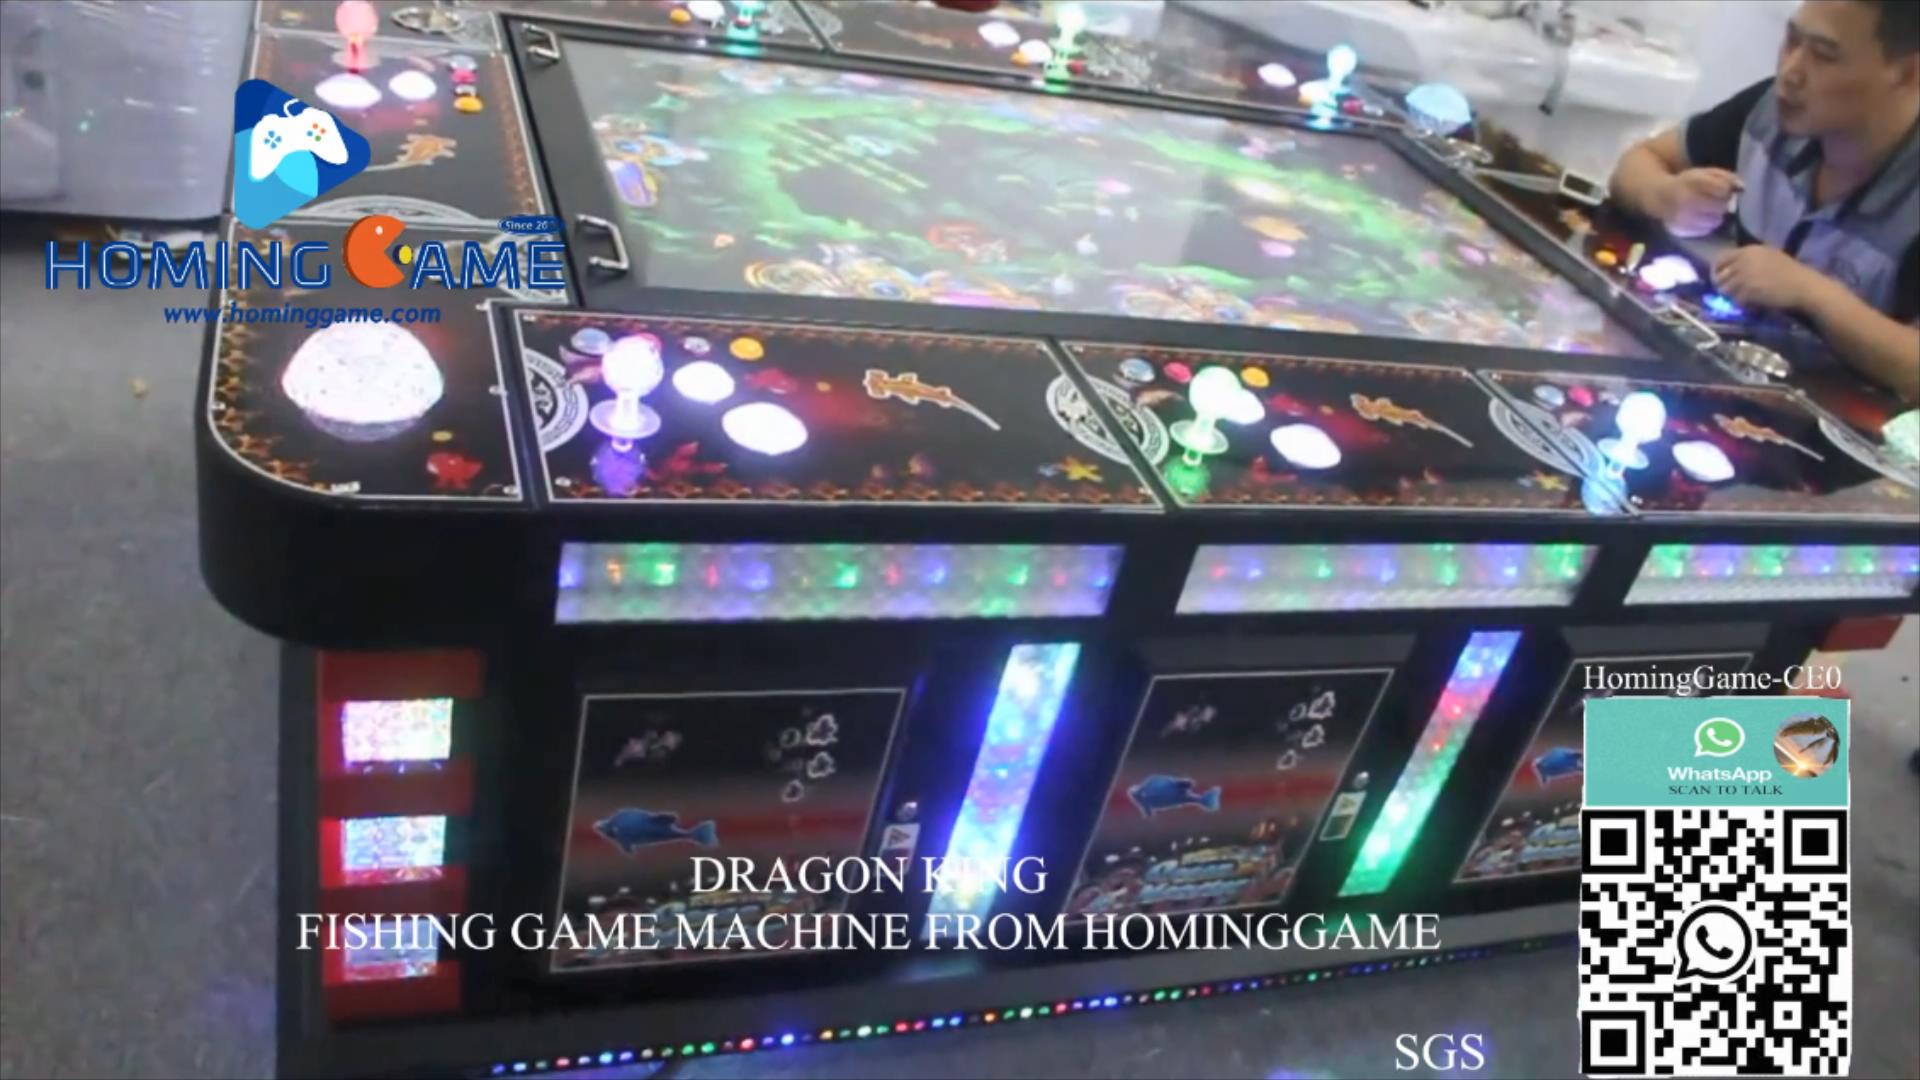 8 Player Dragon King Fishing Game Machine - Hot Sale - HomingGame